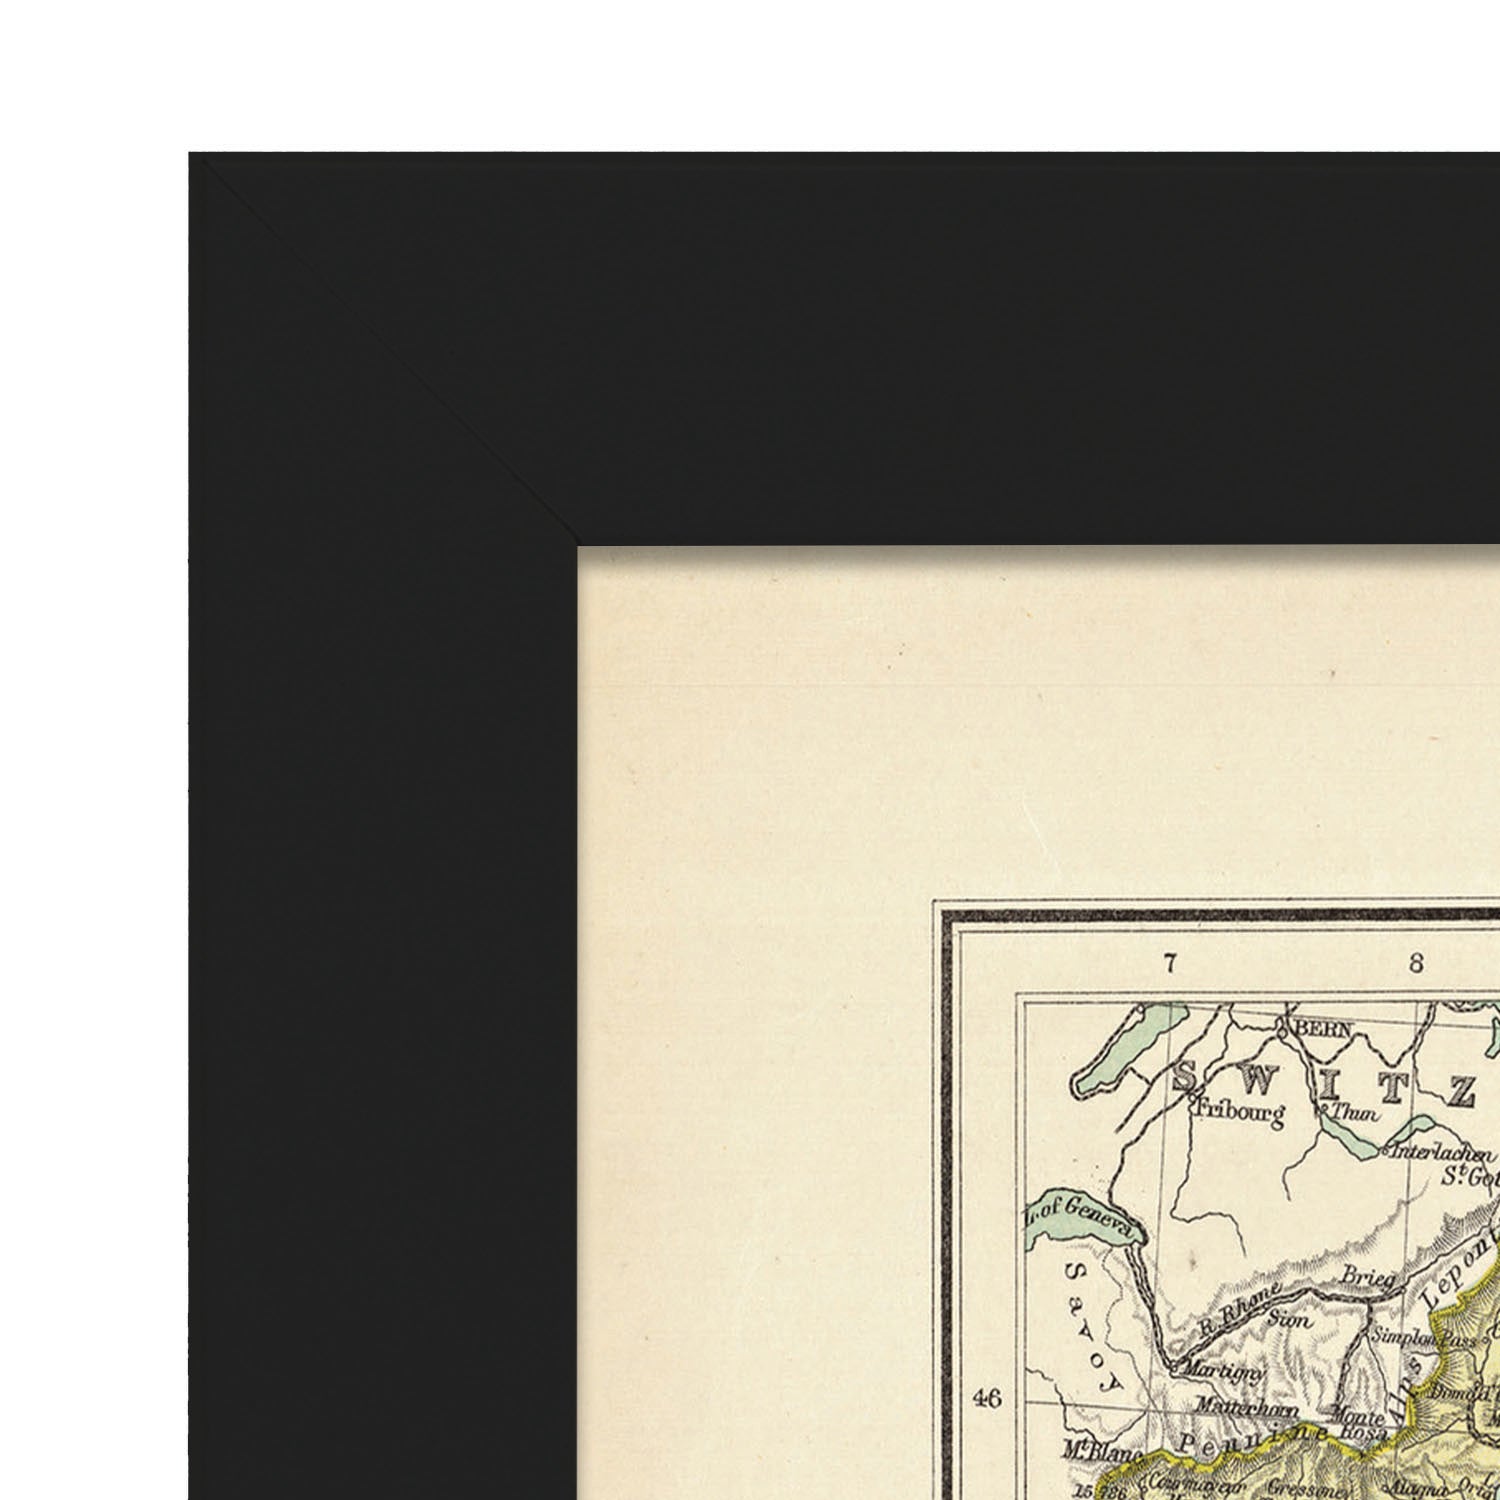 Vintage Map of Italy Citizen Atlas-Artwork-Nacnic-Nacnic Estudio SL